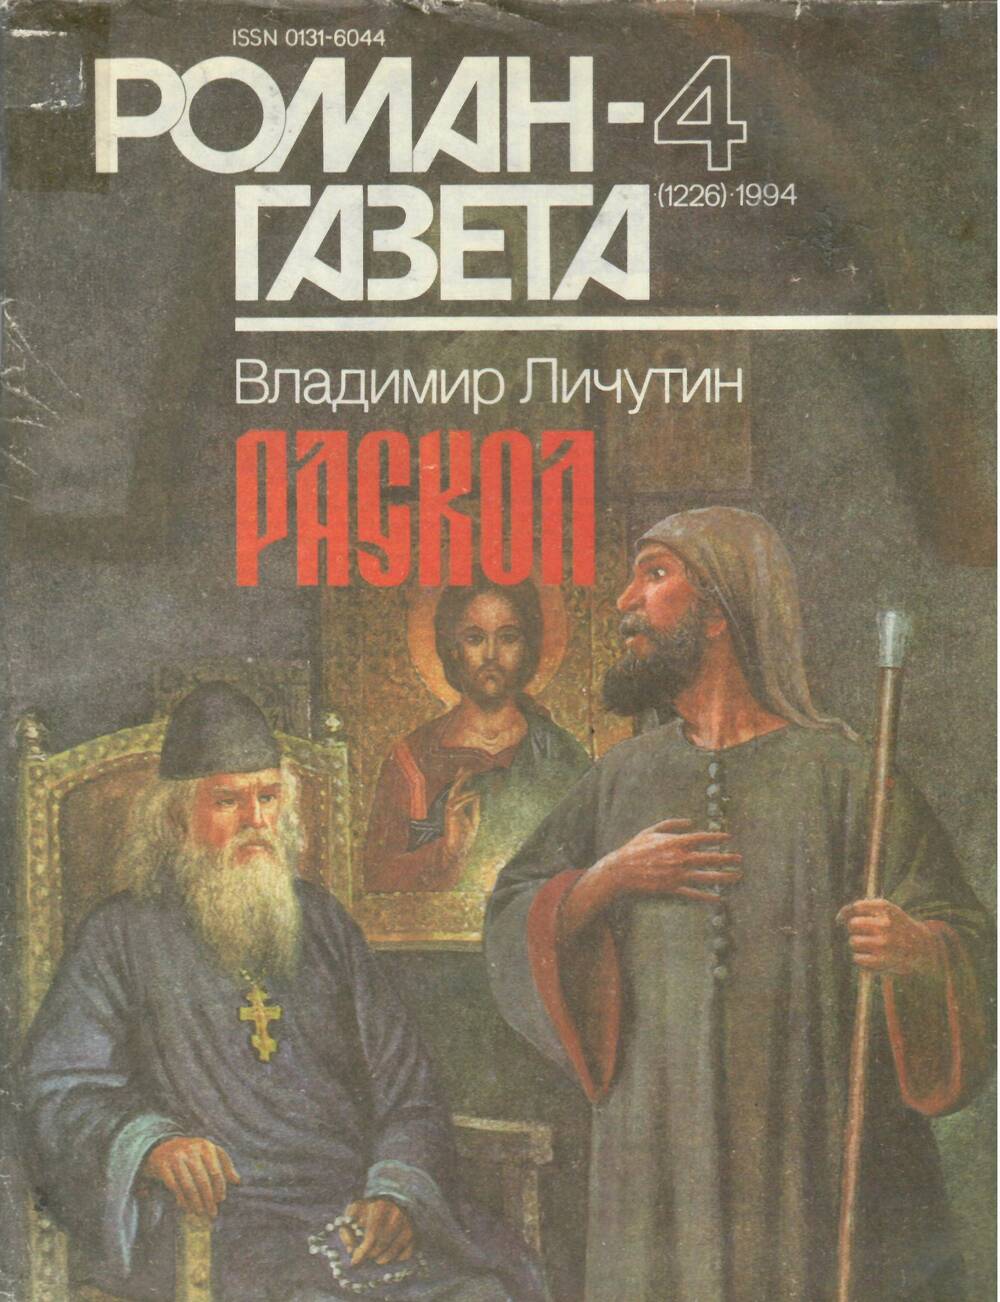 Народный журнал «Роман – газета» - 4 (1226).